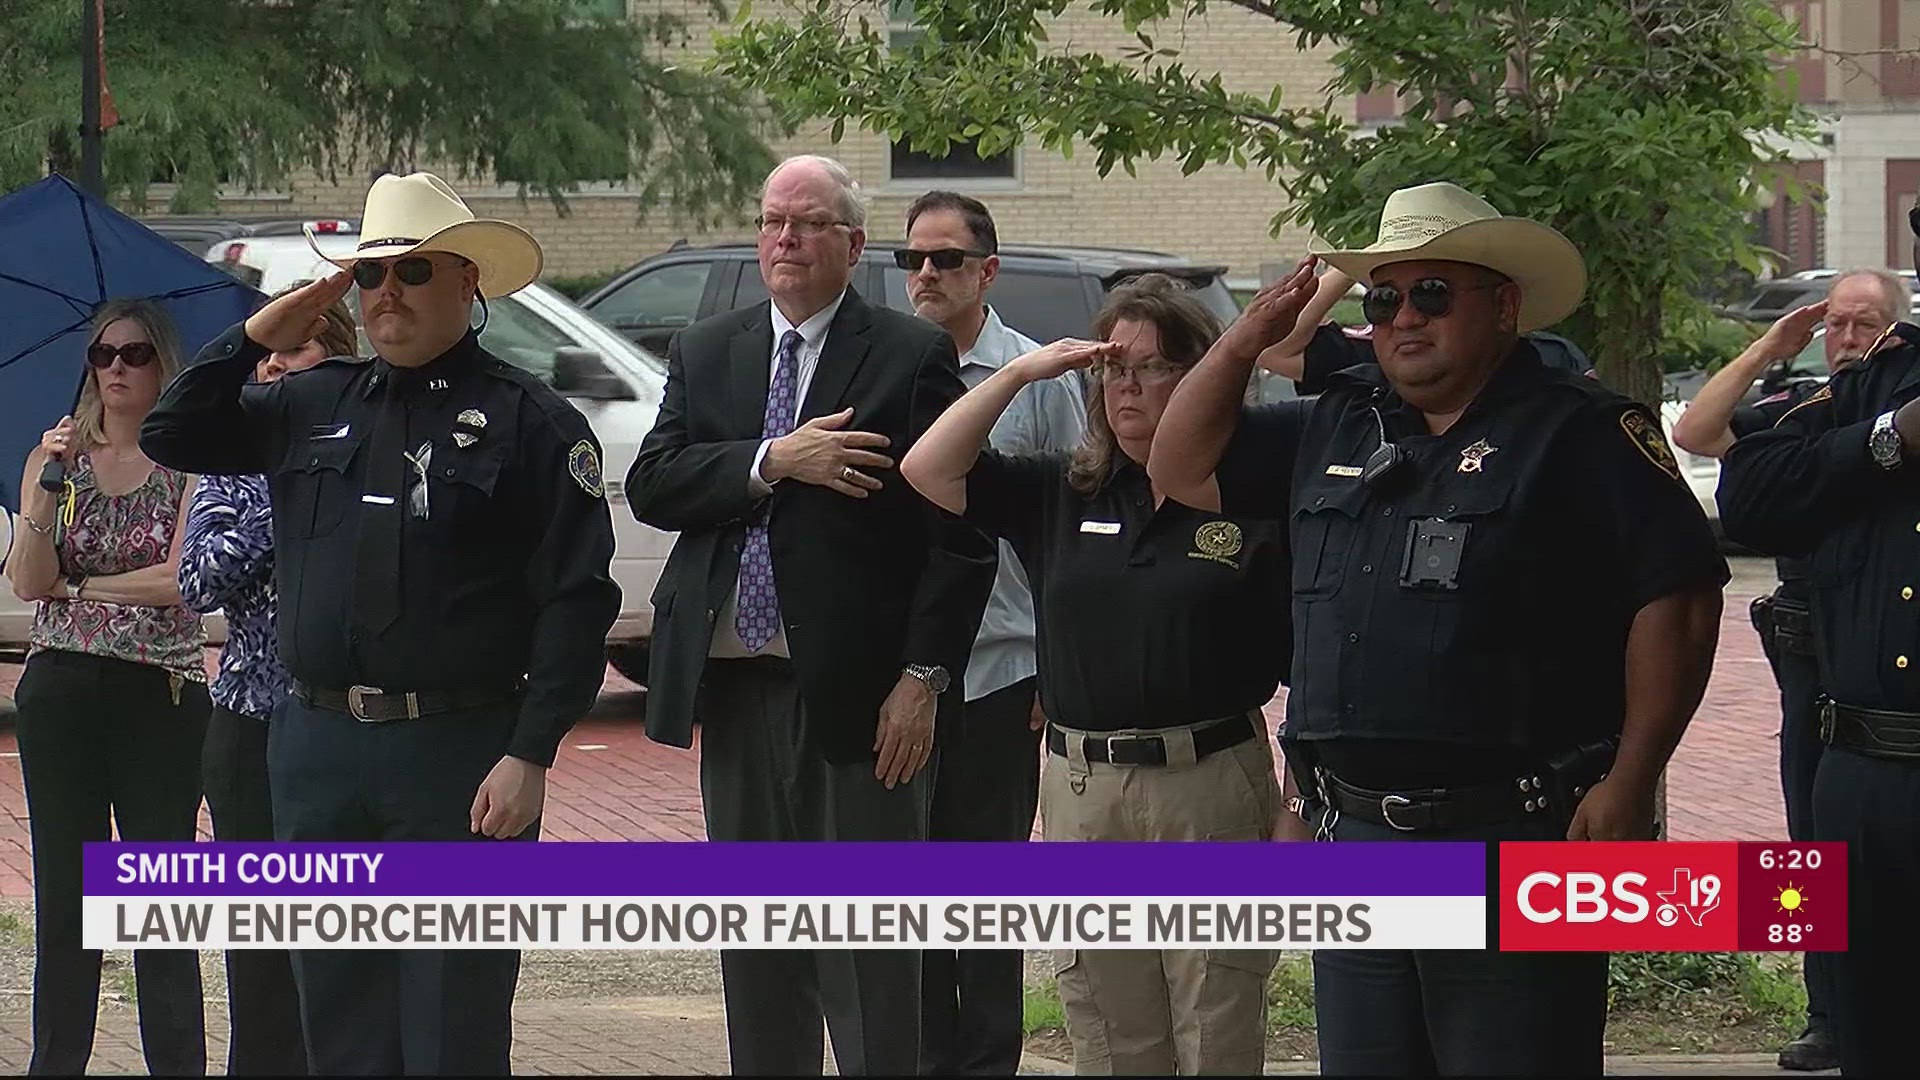 Smith County law enforcement honor fallen service members